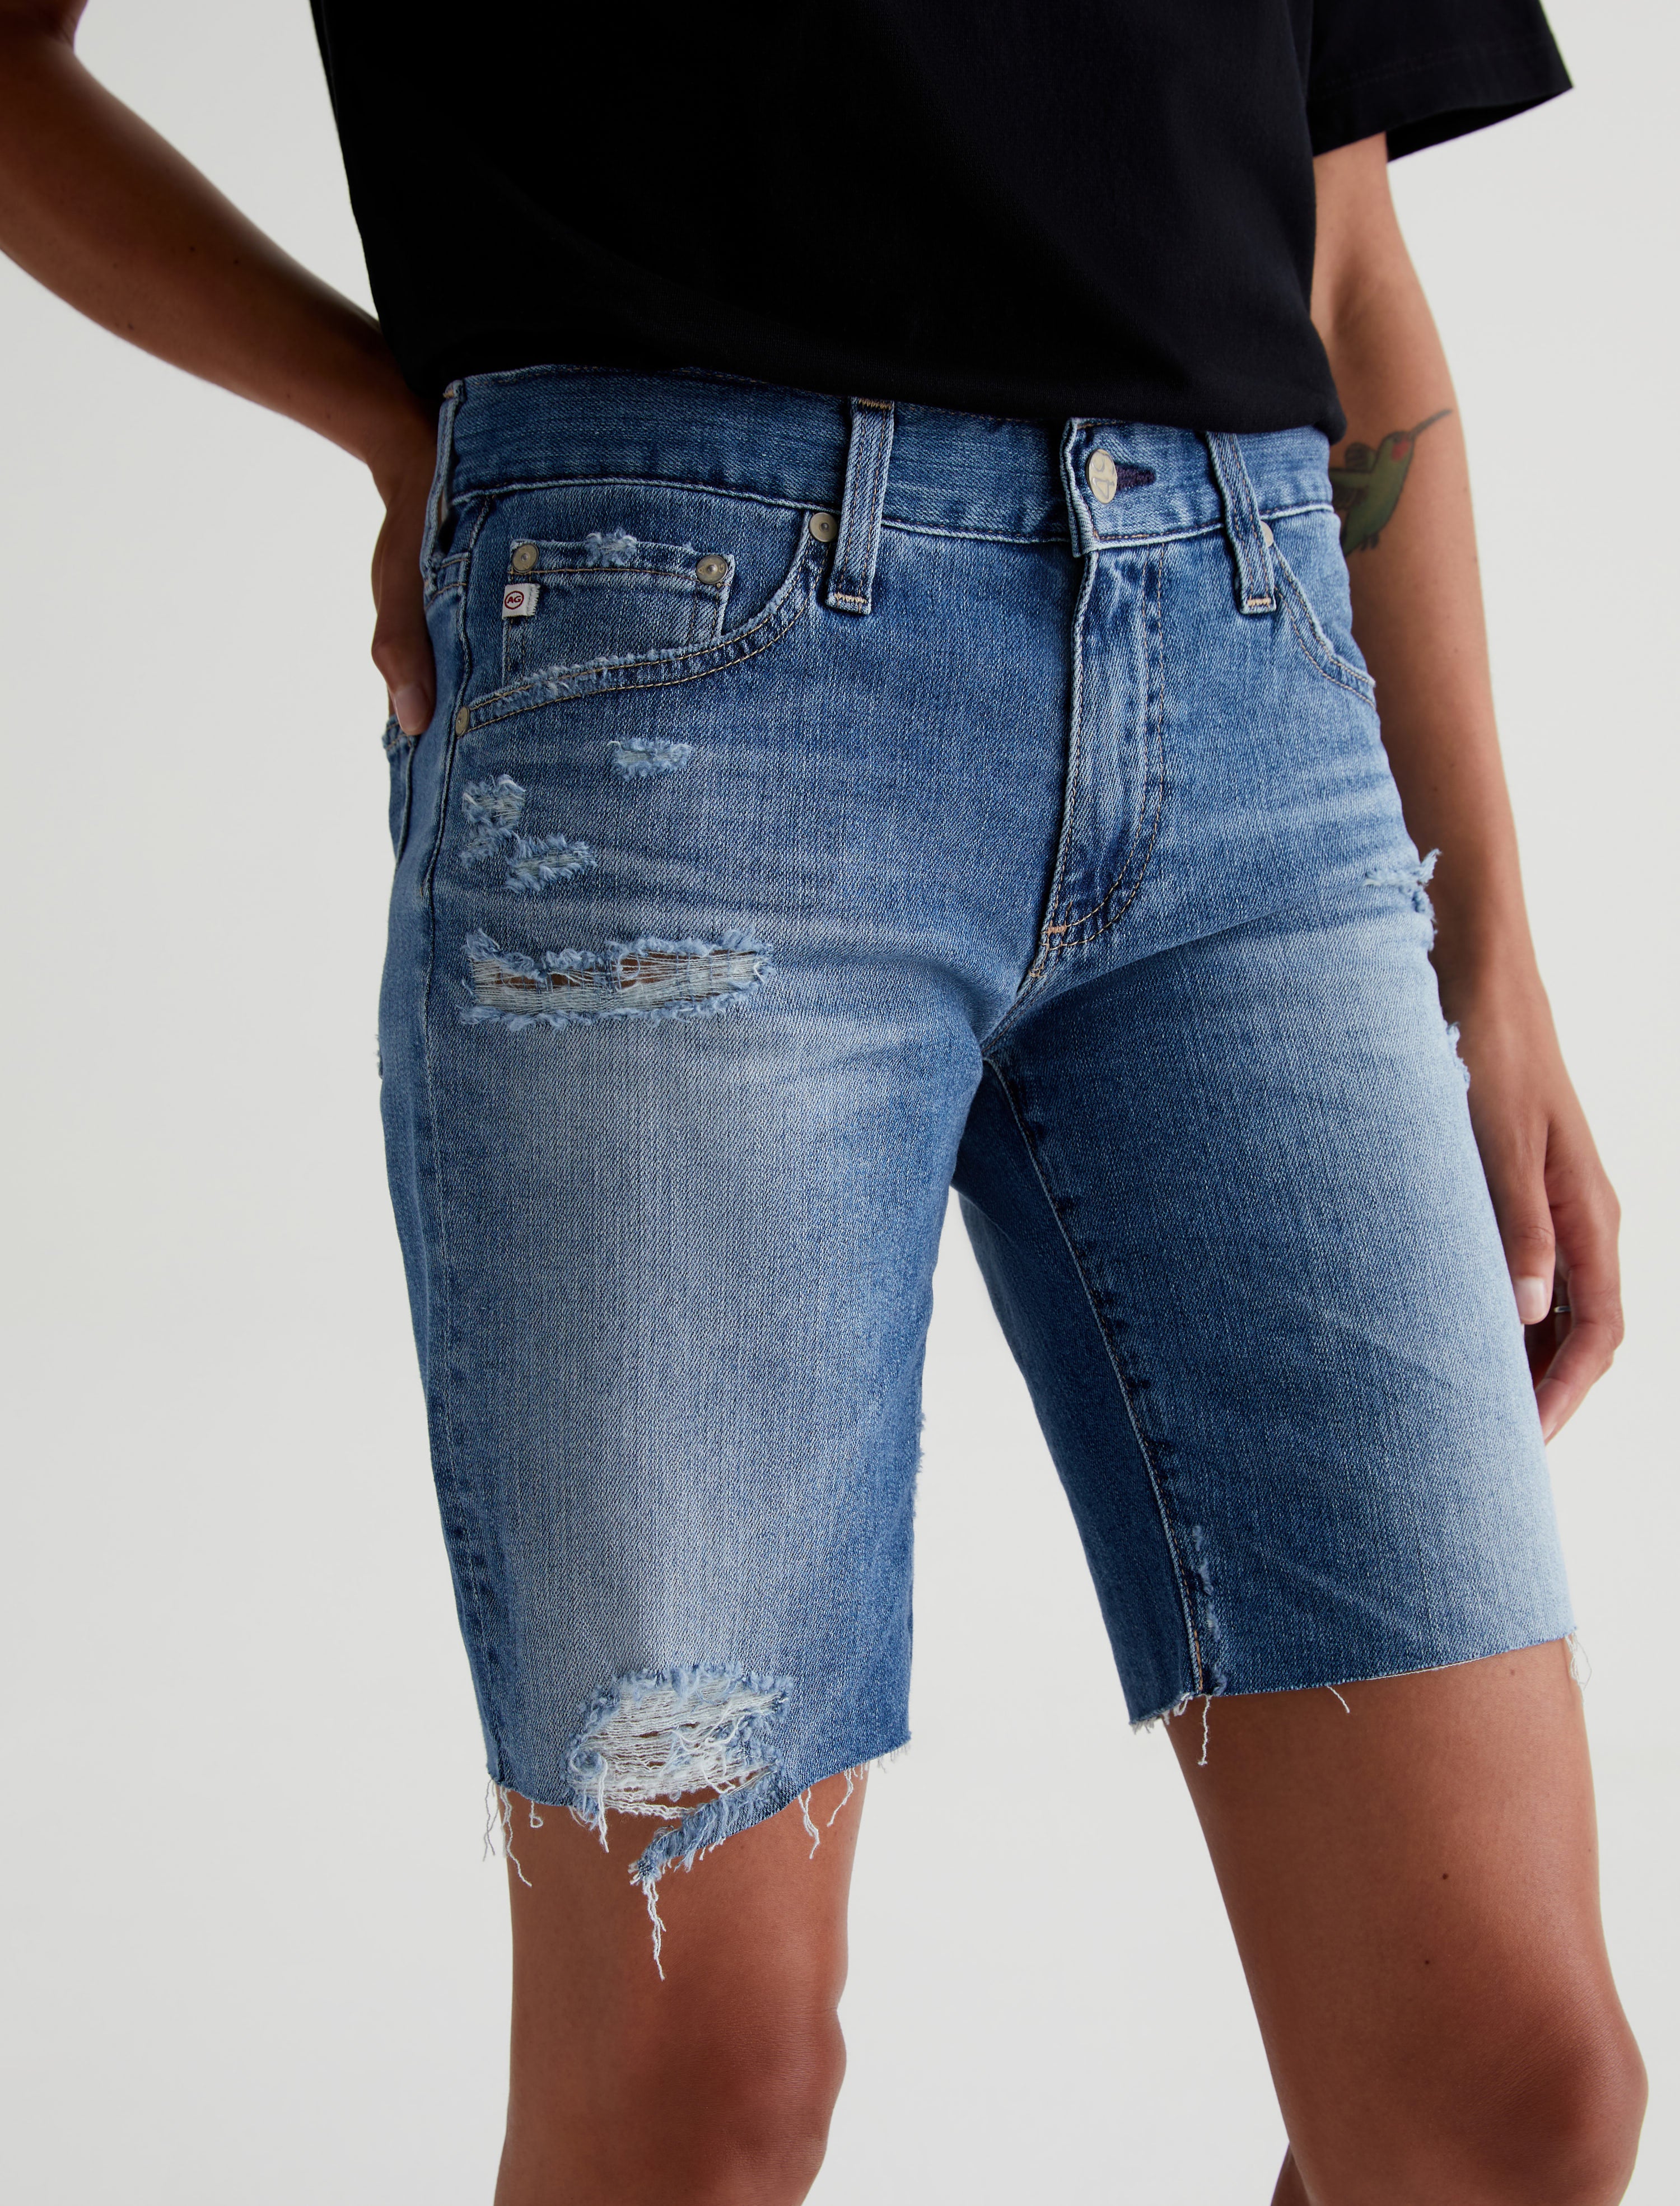 Buy SweatyRocks Women's Casual High Waisted Ripped Denim Jeans Folded Skinny  Jean Shorts, Medium Wash, X-Small at Amazon.in